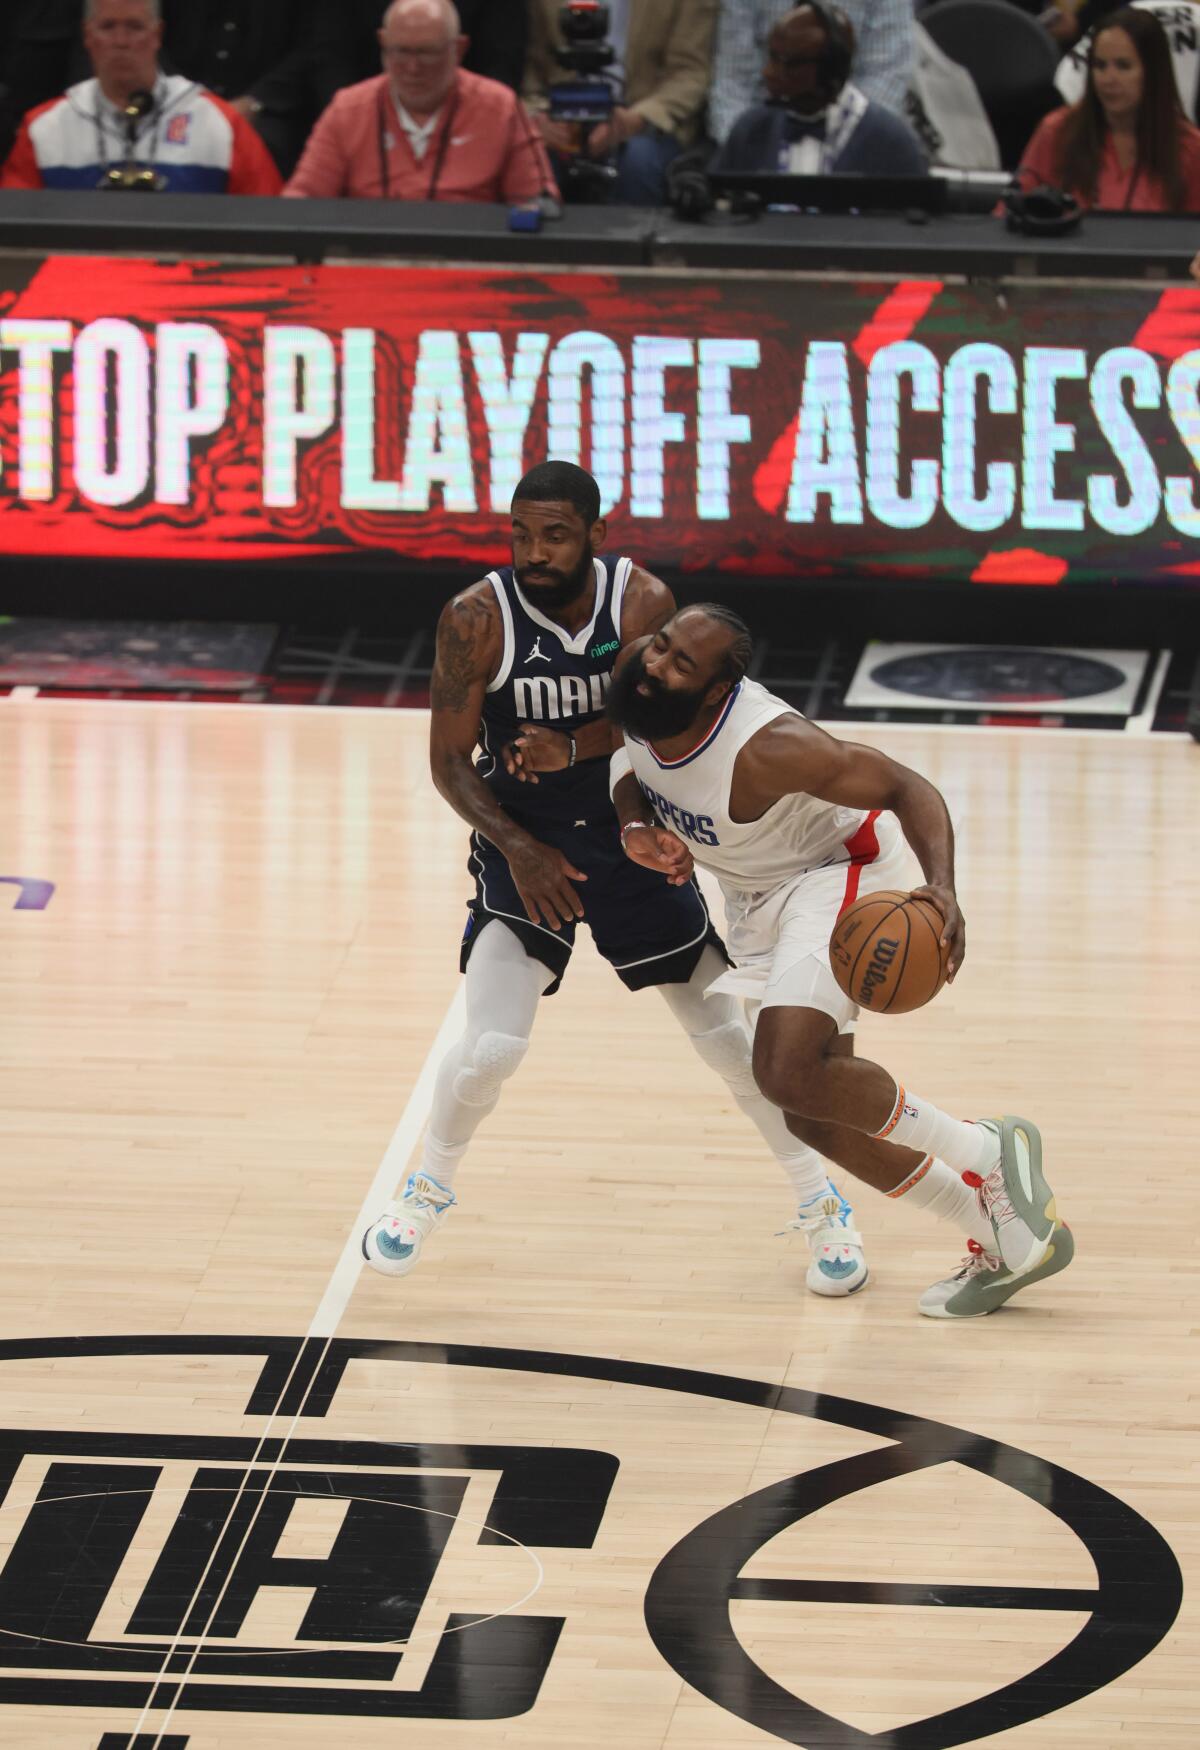 Clippers shooting guard James Harden dribbles under pressure from the Dallas Mavericks' Tim Hardaway Jr. 